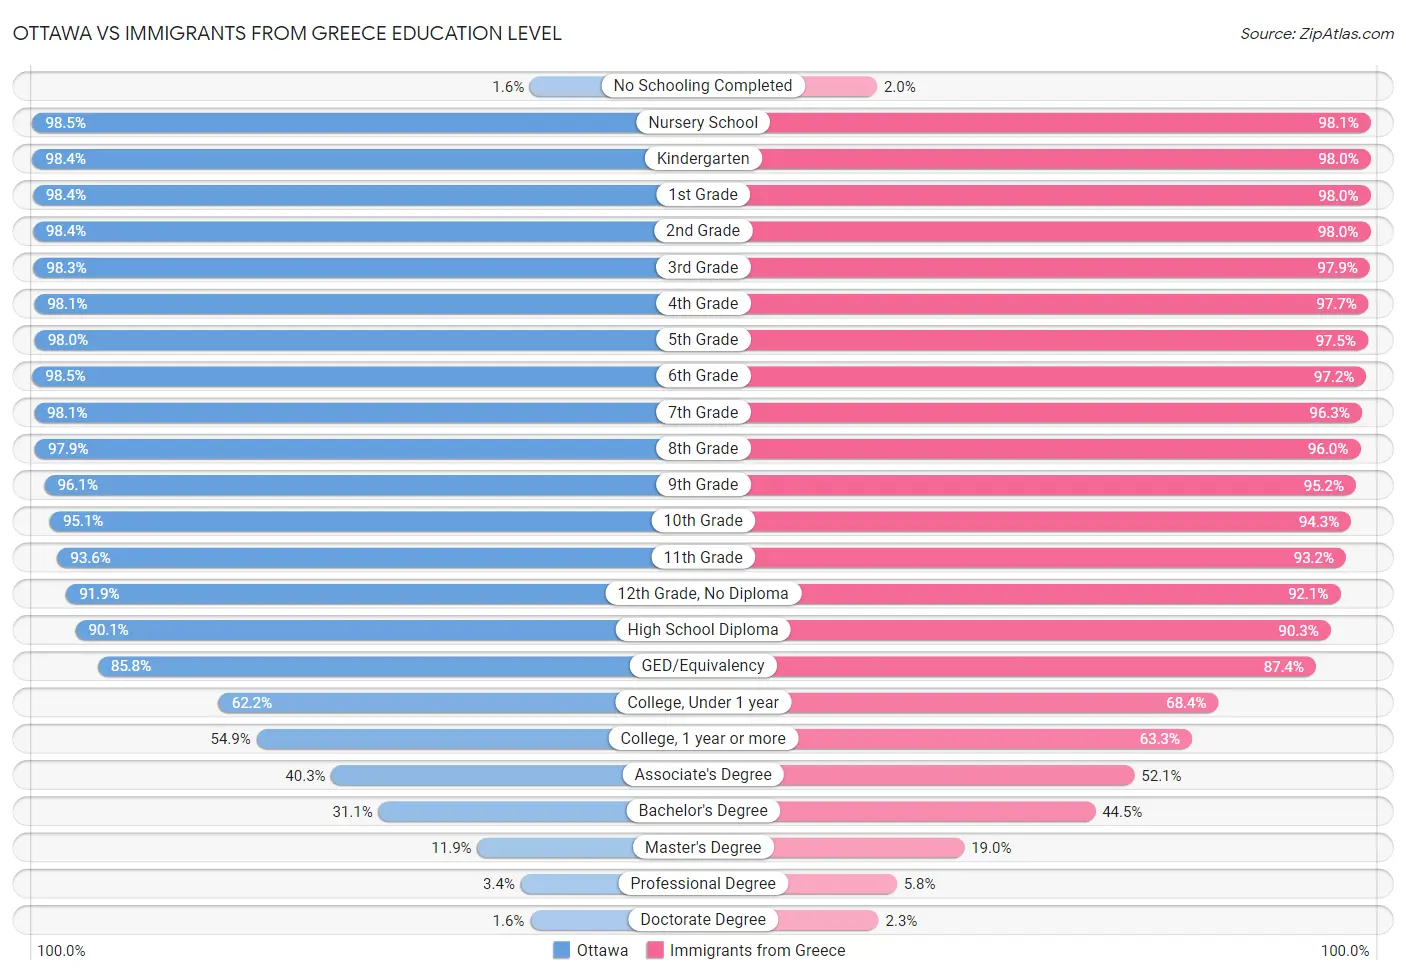 Ottawa vs Immigrants from Greece Education Level